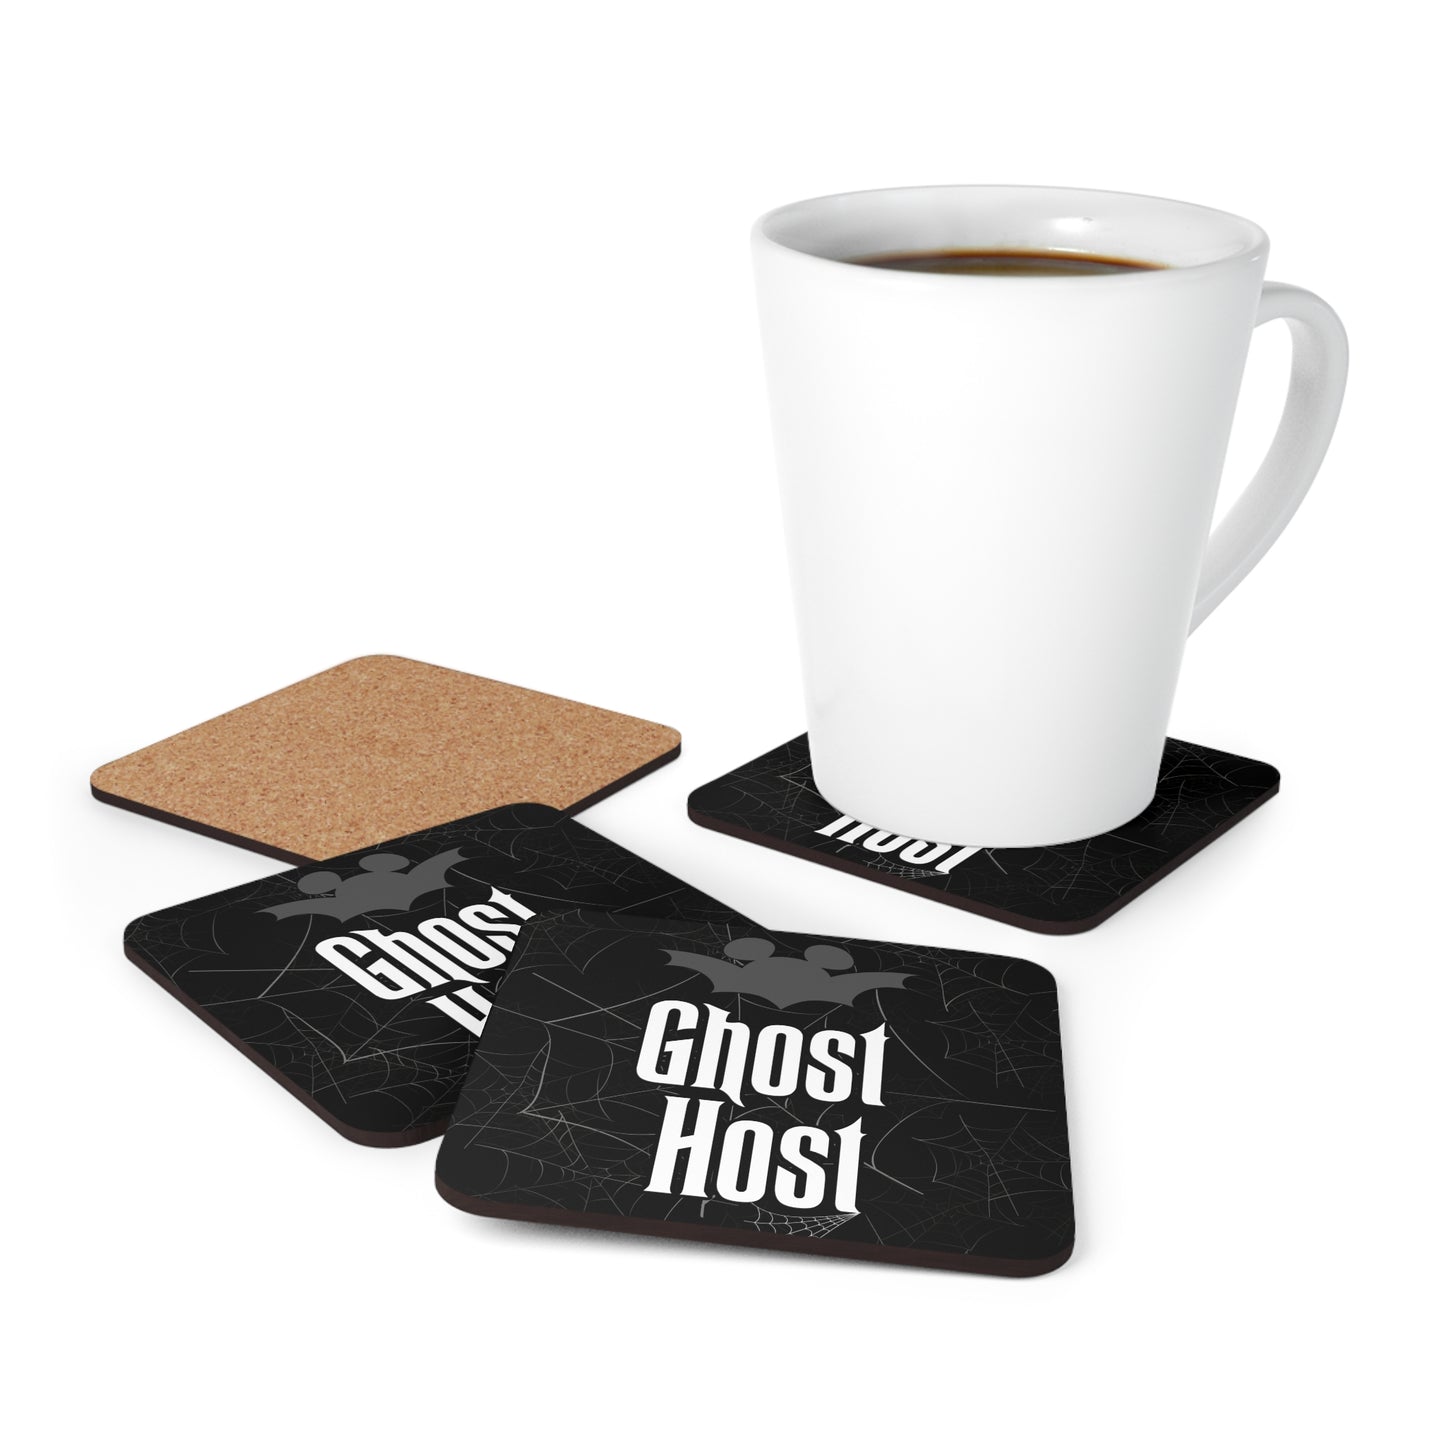 Ghost Host - Corkwood Coaster Set